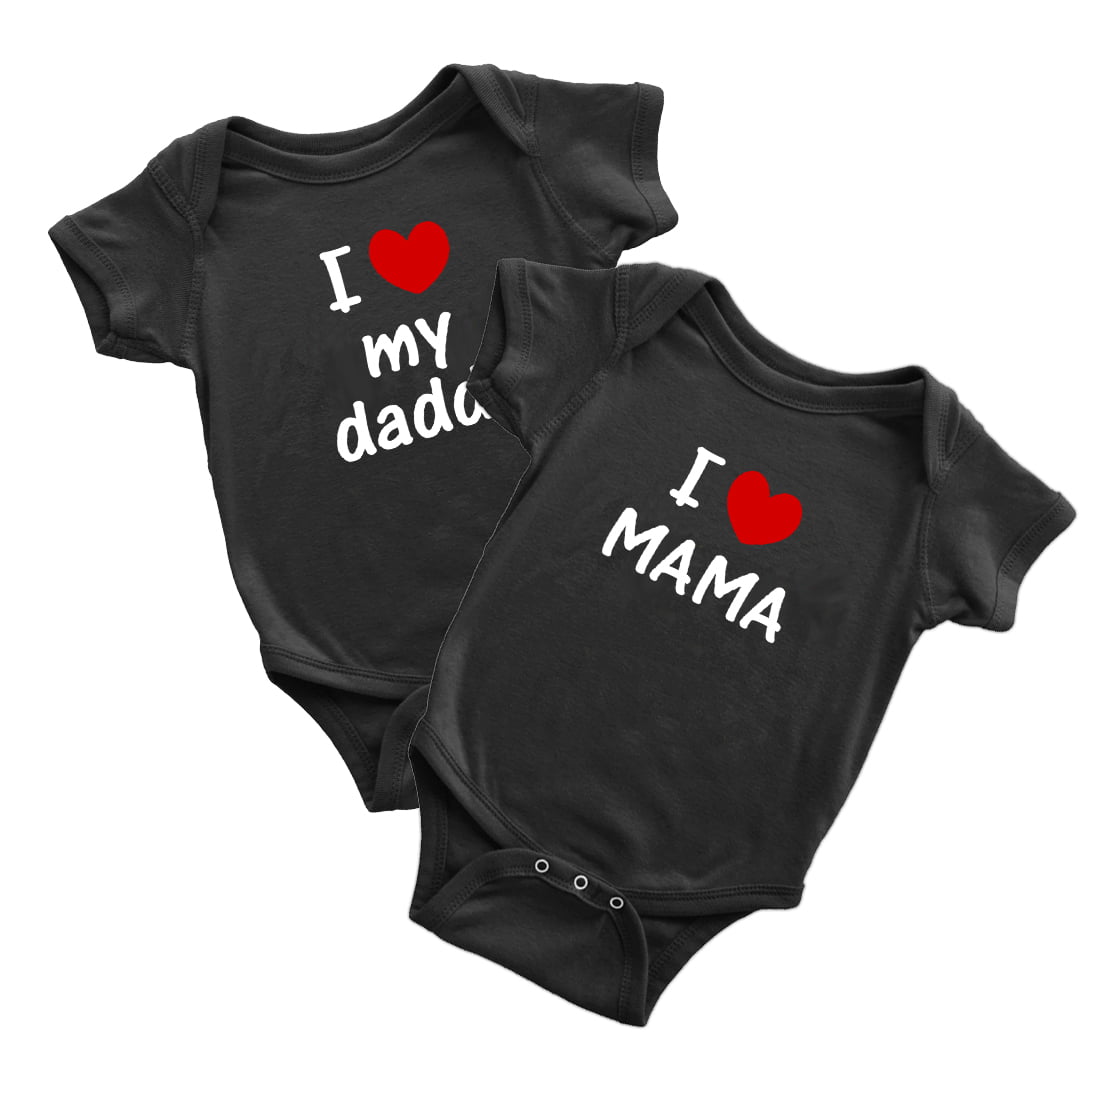 I Love MAMA PAPA Twins Baby Clothes Jumpsuit Bodysuit (Black, 0-3M)